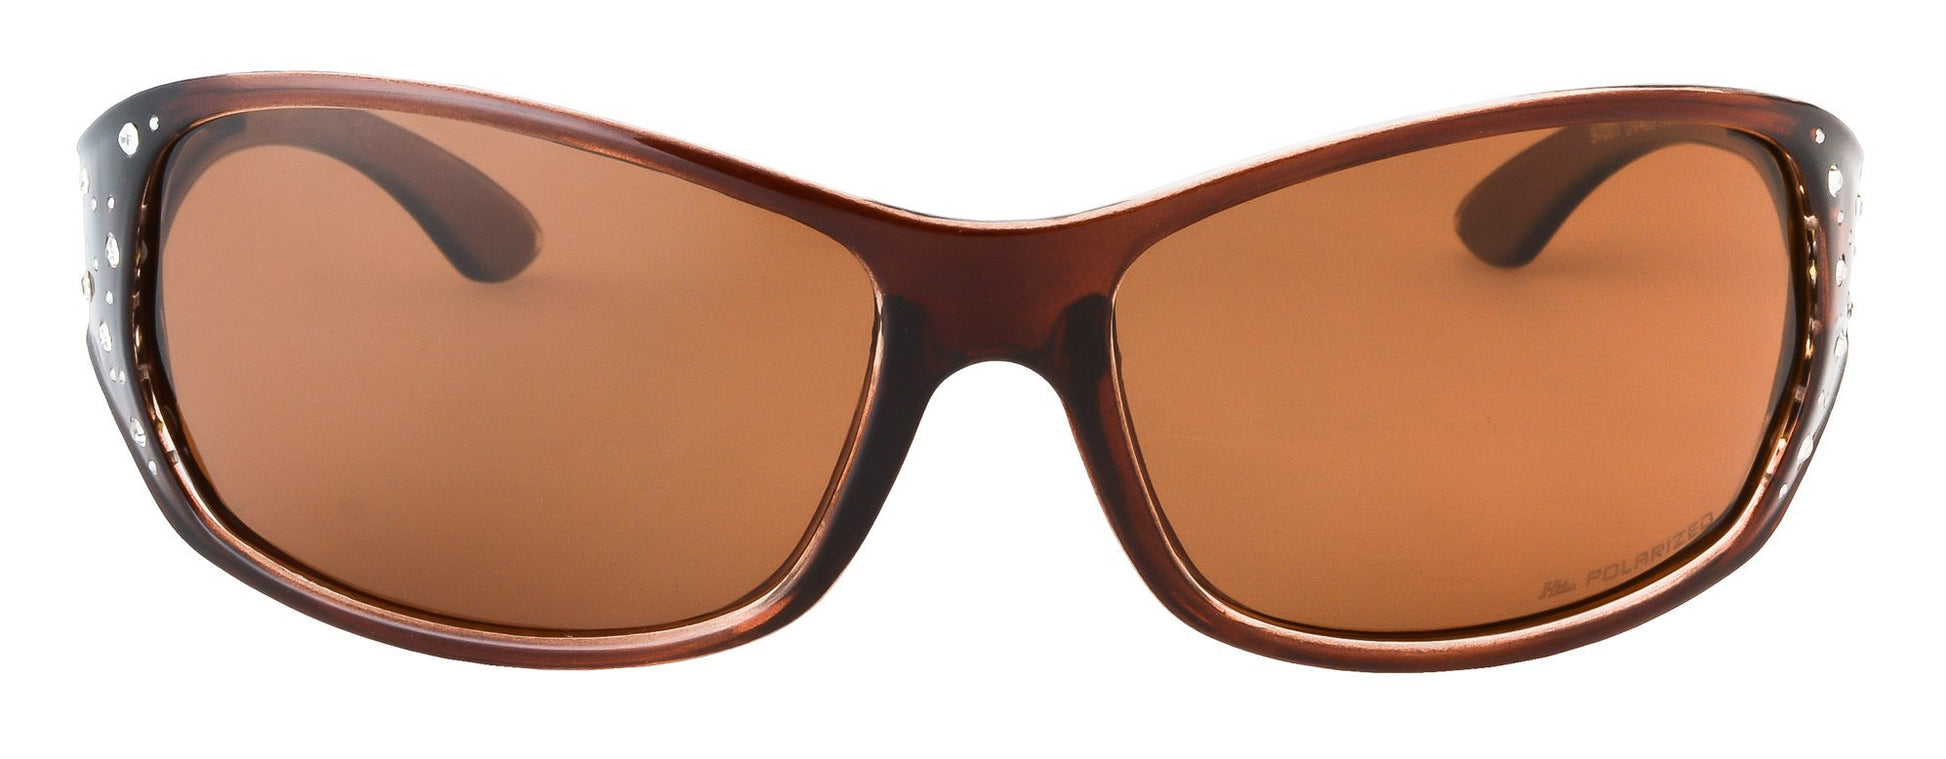 Second image: Polarized Sunglasses for Women – Honey Amber Frame – Amber Lens – HZ Series Elettra – Women’s Premium Designer Fashion Sunglasses